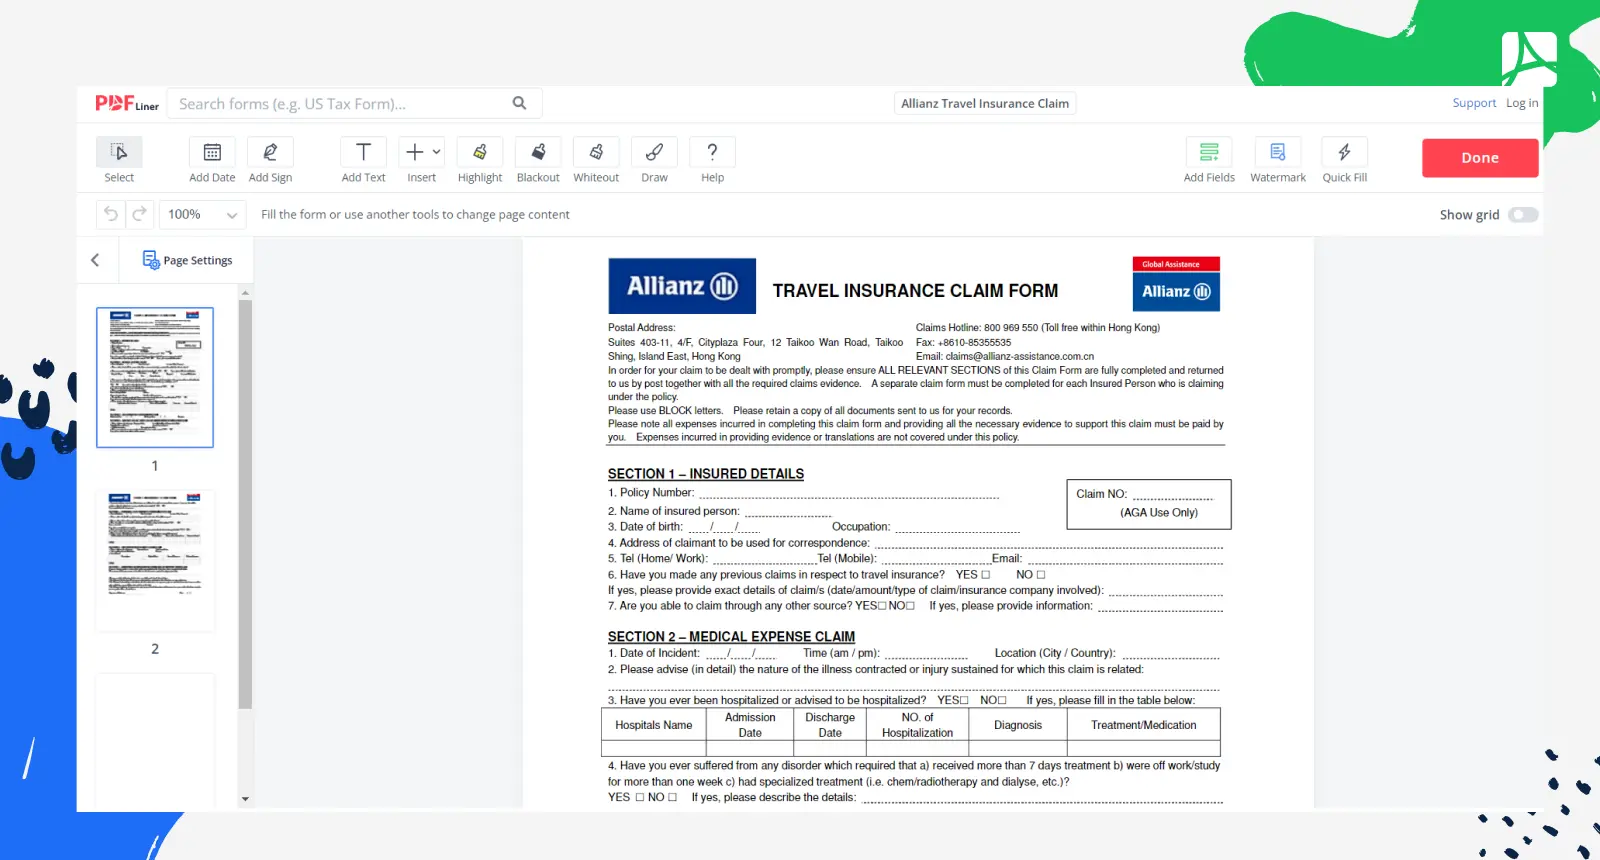 Allianz Travel Insurance Claim Form Screenshot